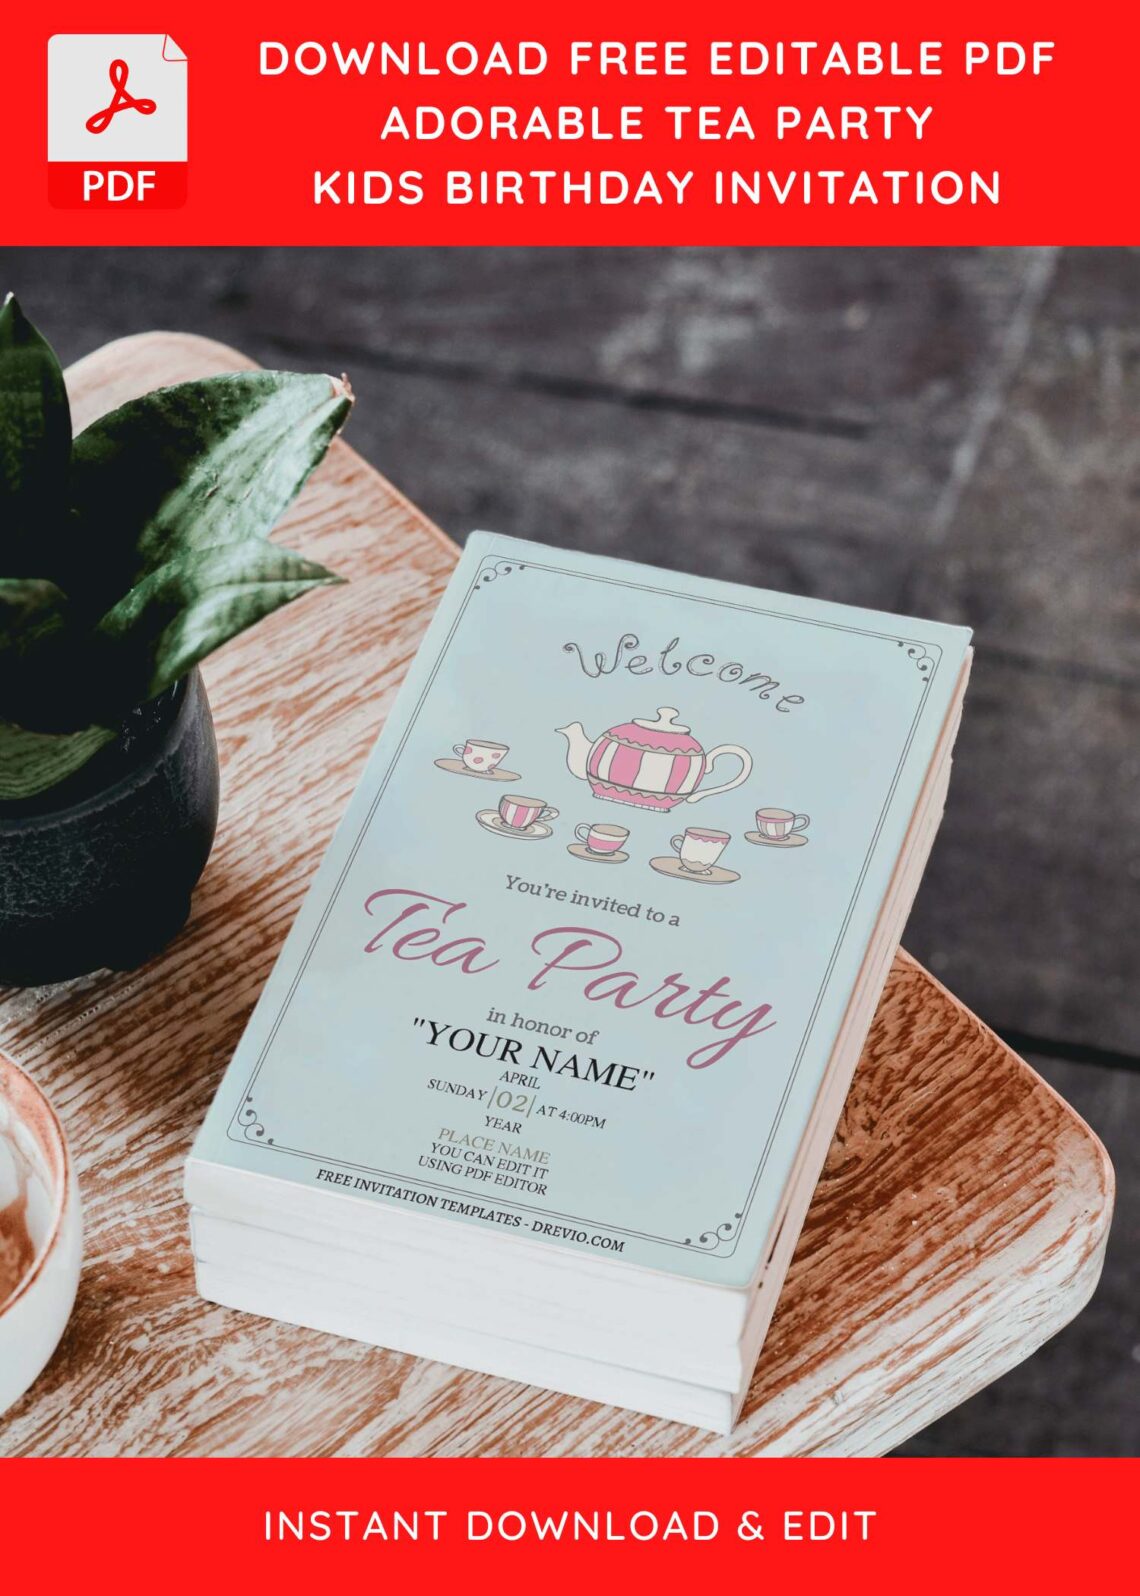 (Free Editable PDF) Adorable Tea Party Birthday Invitation Templates D